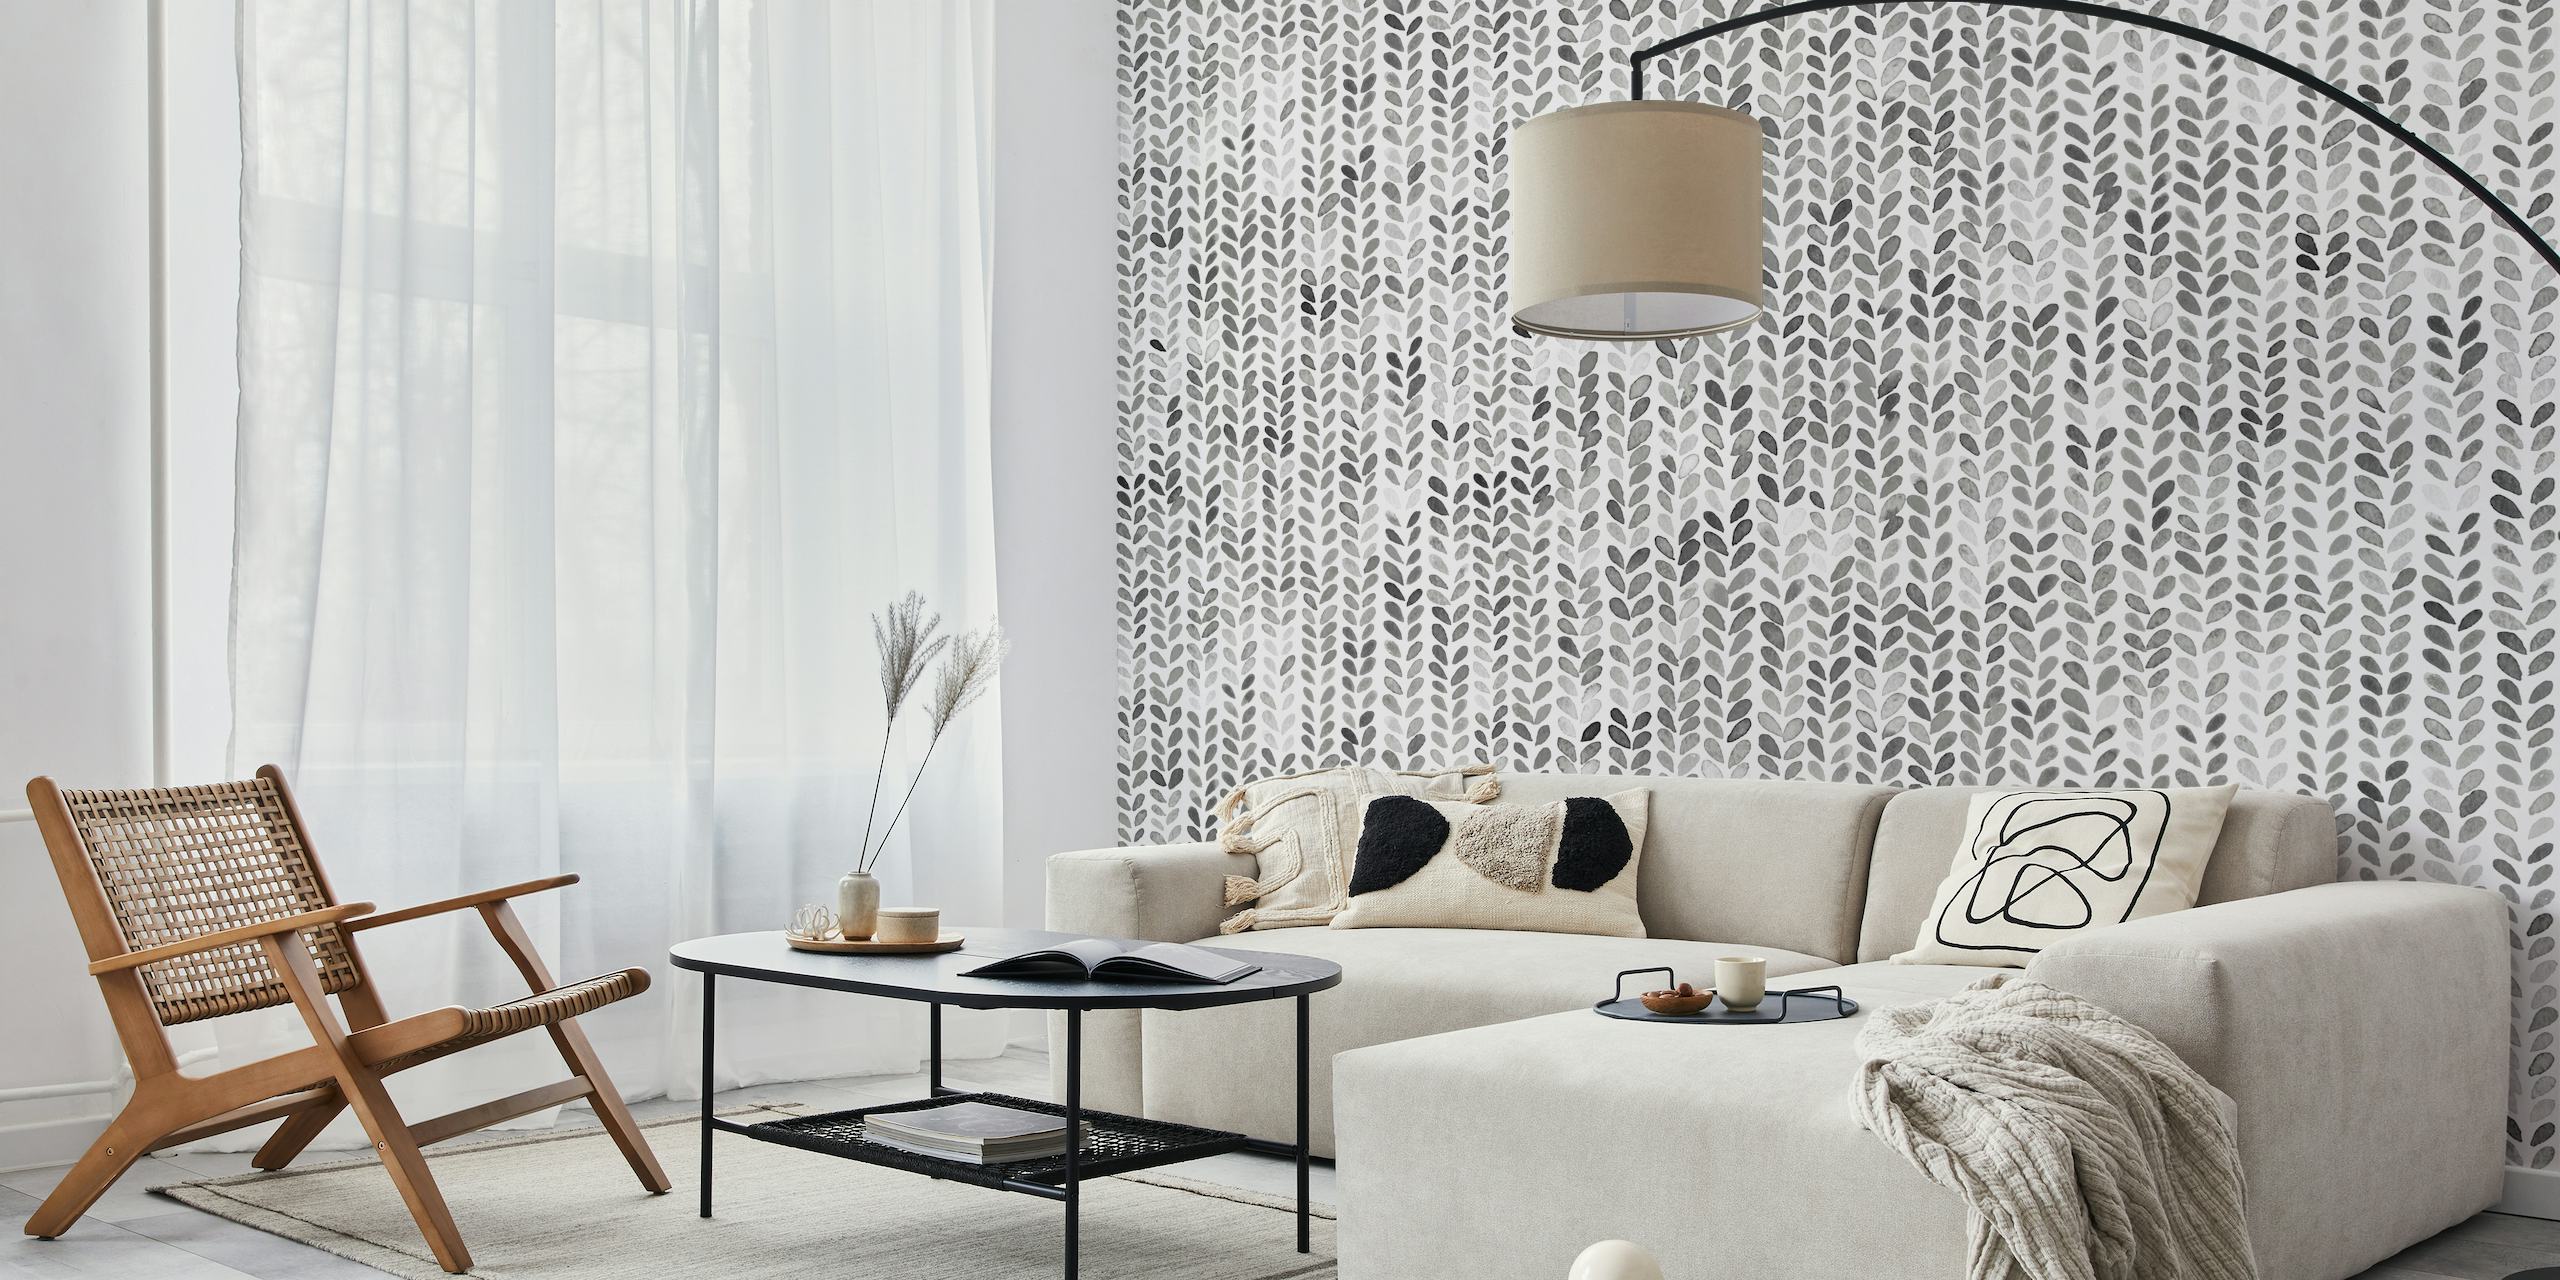 Knitting Texture Gray wallpaper